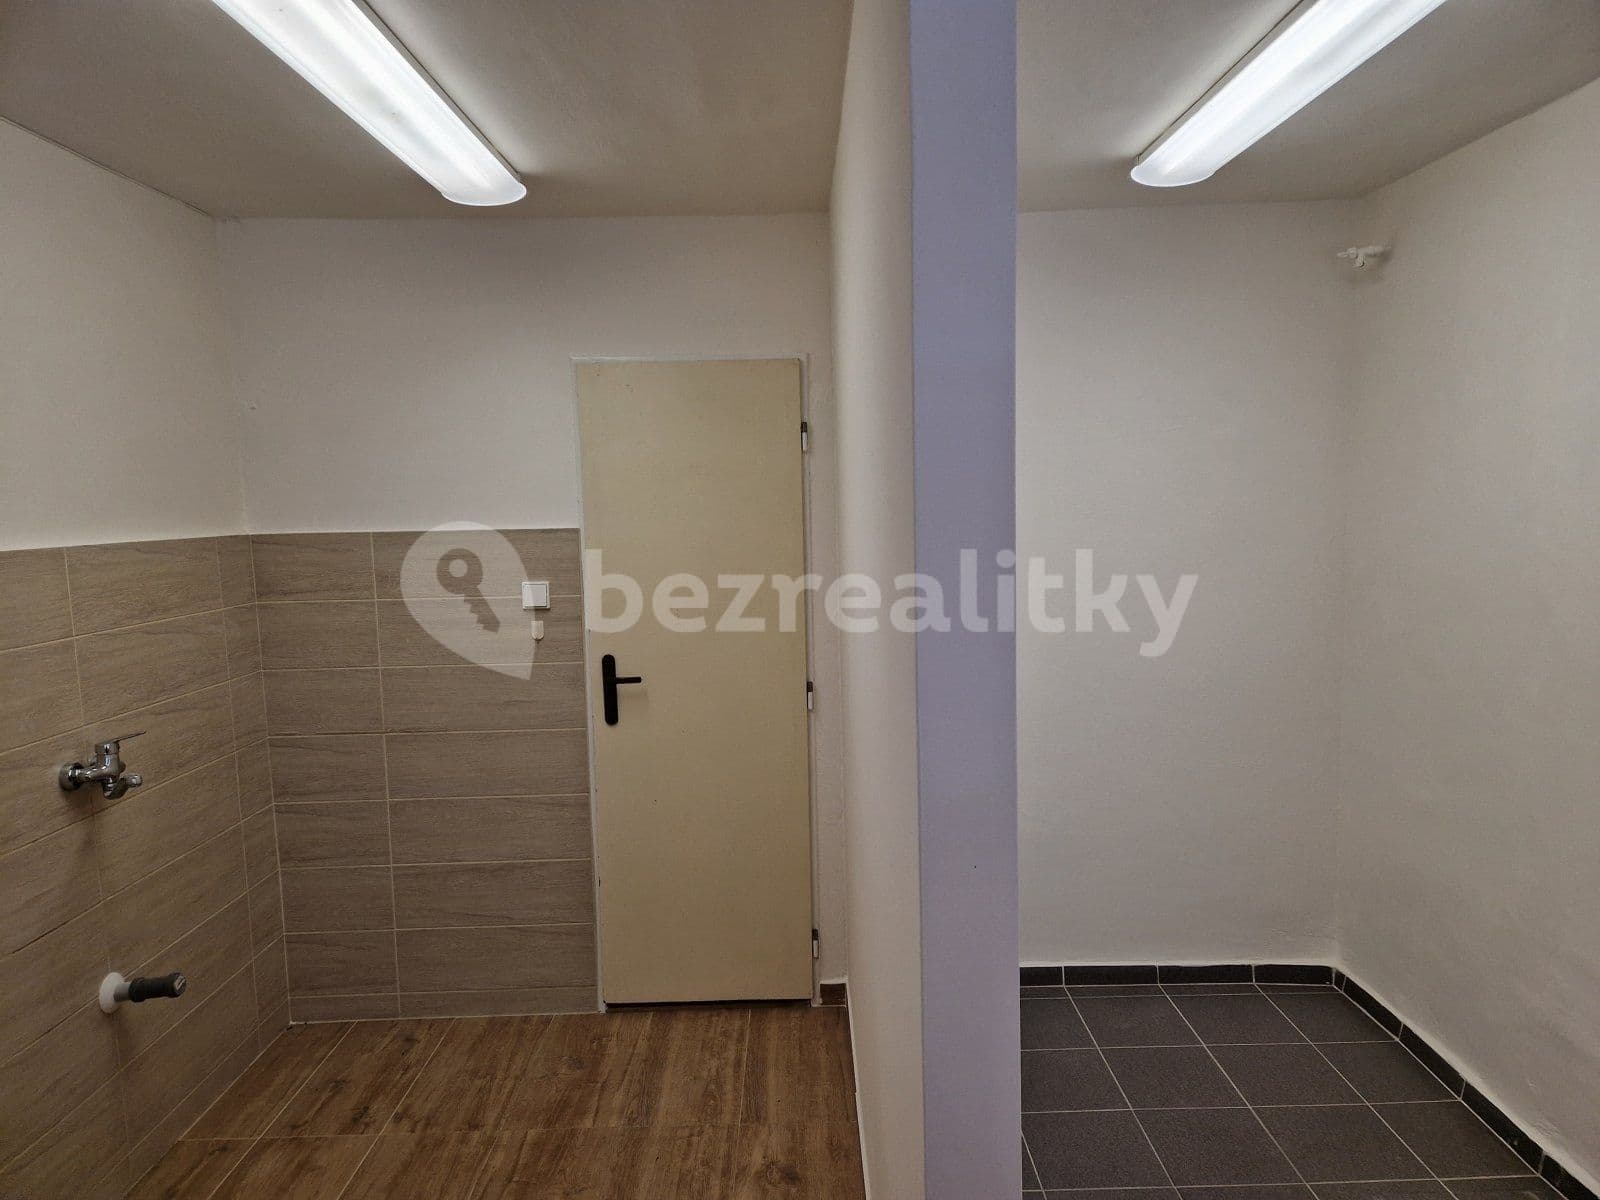 non-residential property to rent, 68 m², Chopinova, Havířov, Moravskoslezský Region